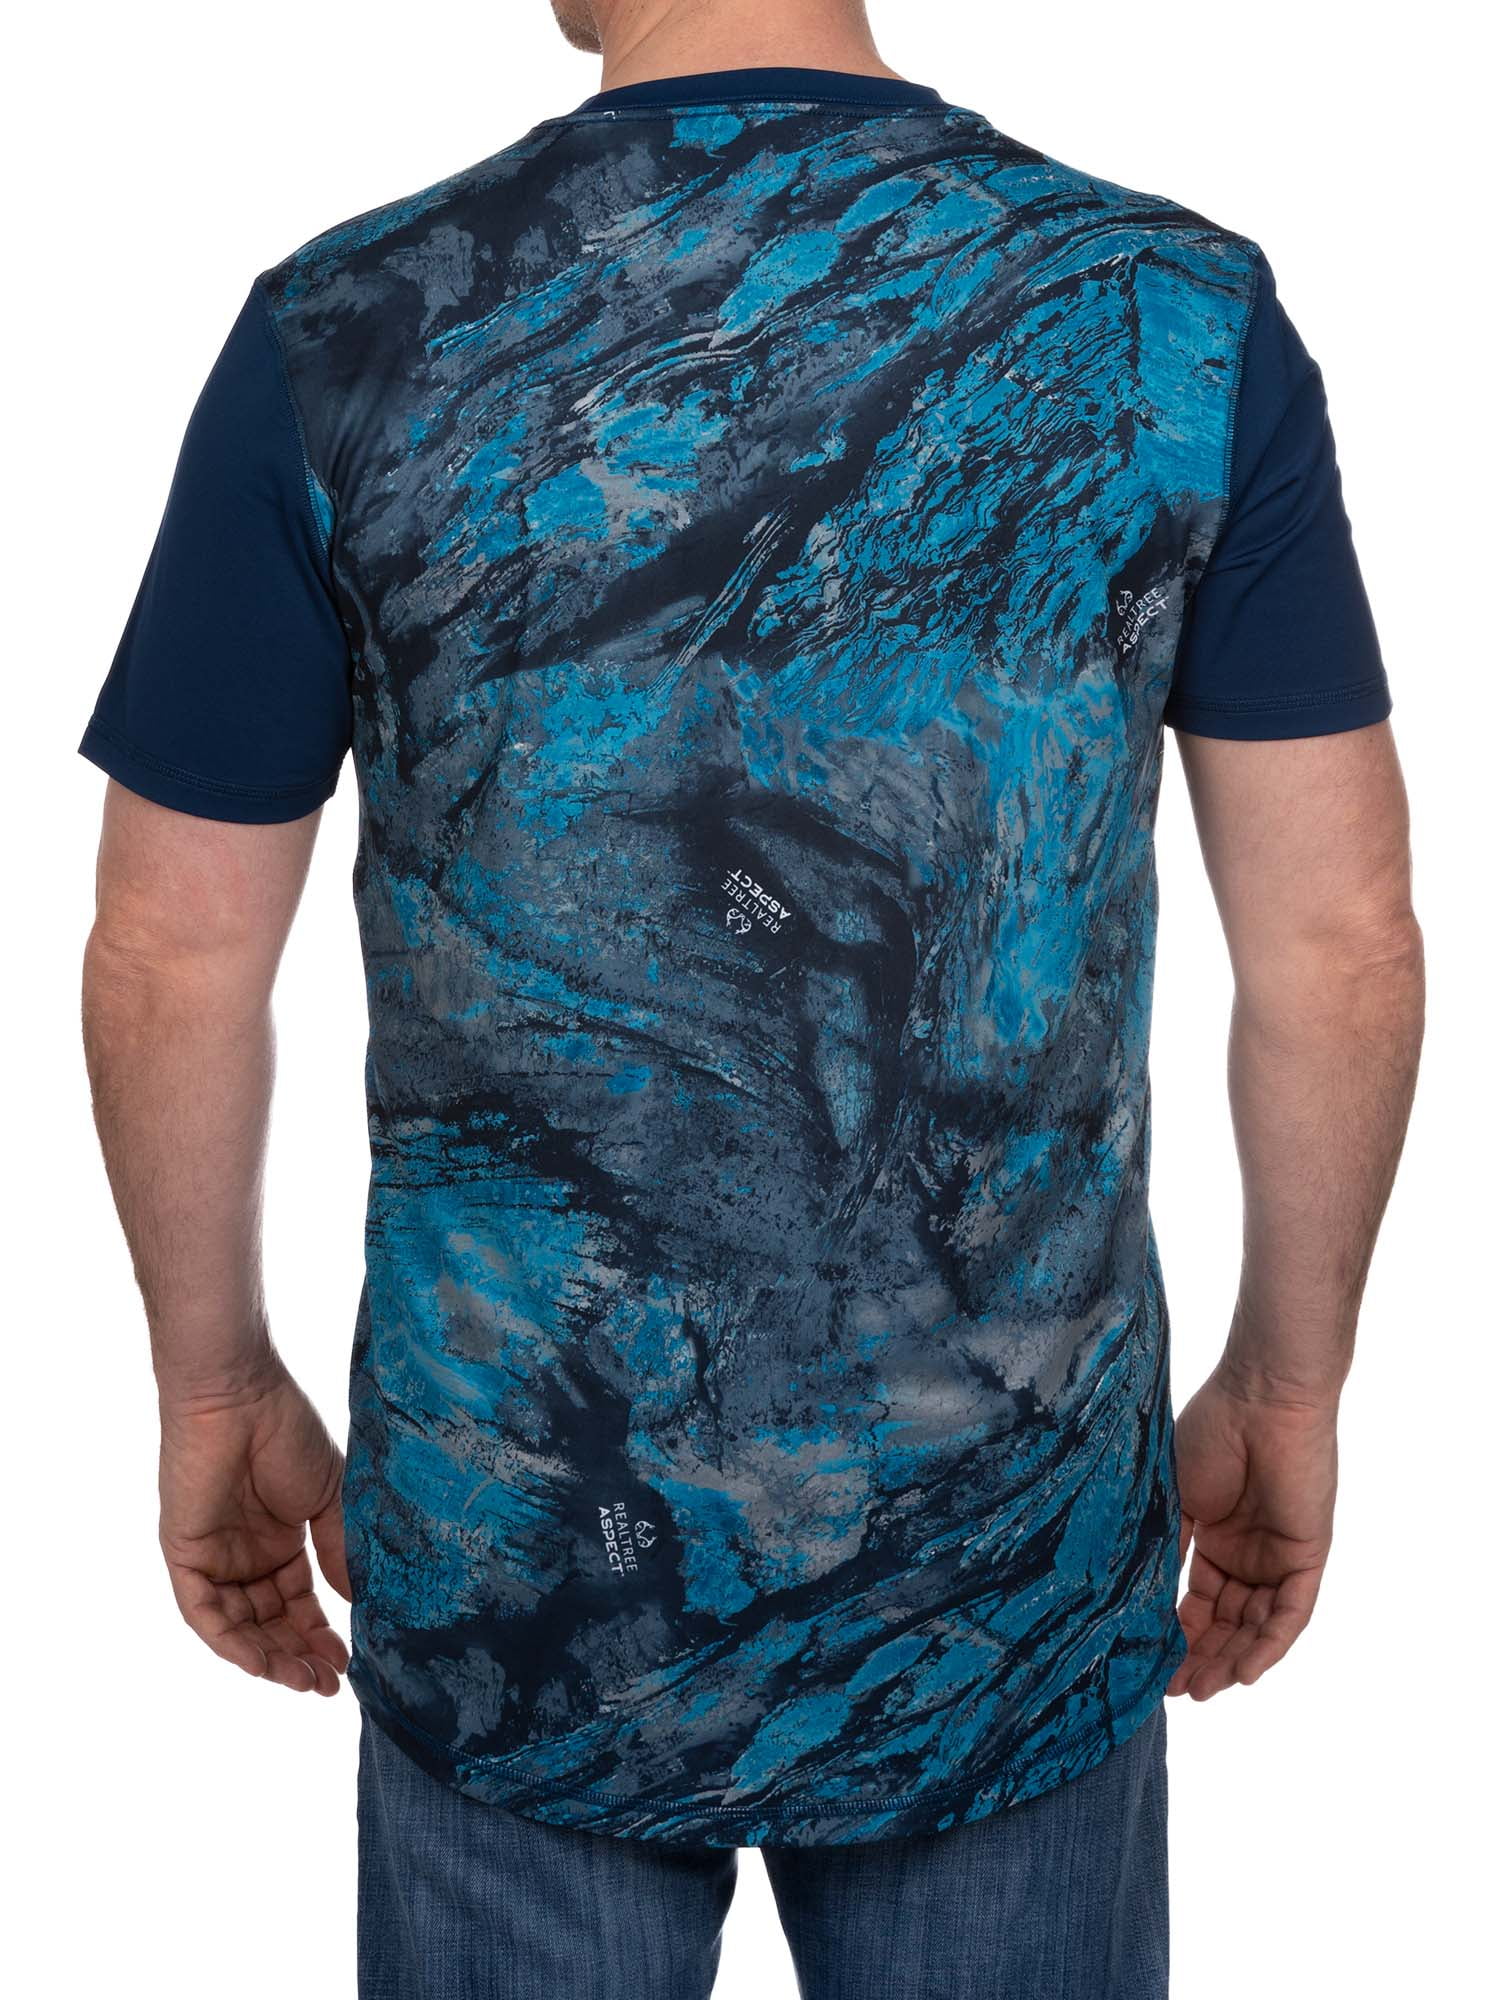 Realtree Fishing WAVE Blue Water Camo Shirt RN#91497 Men's Size Medium